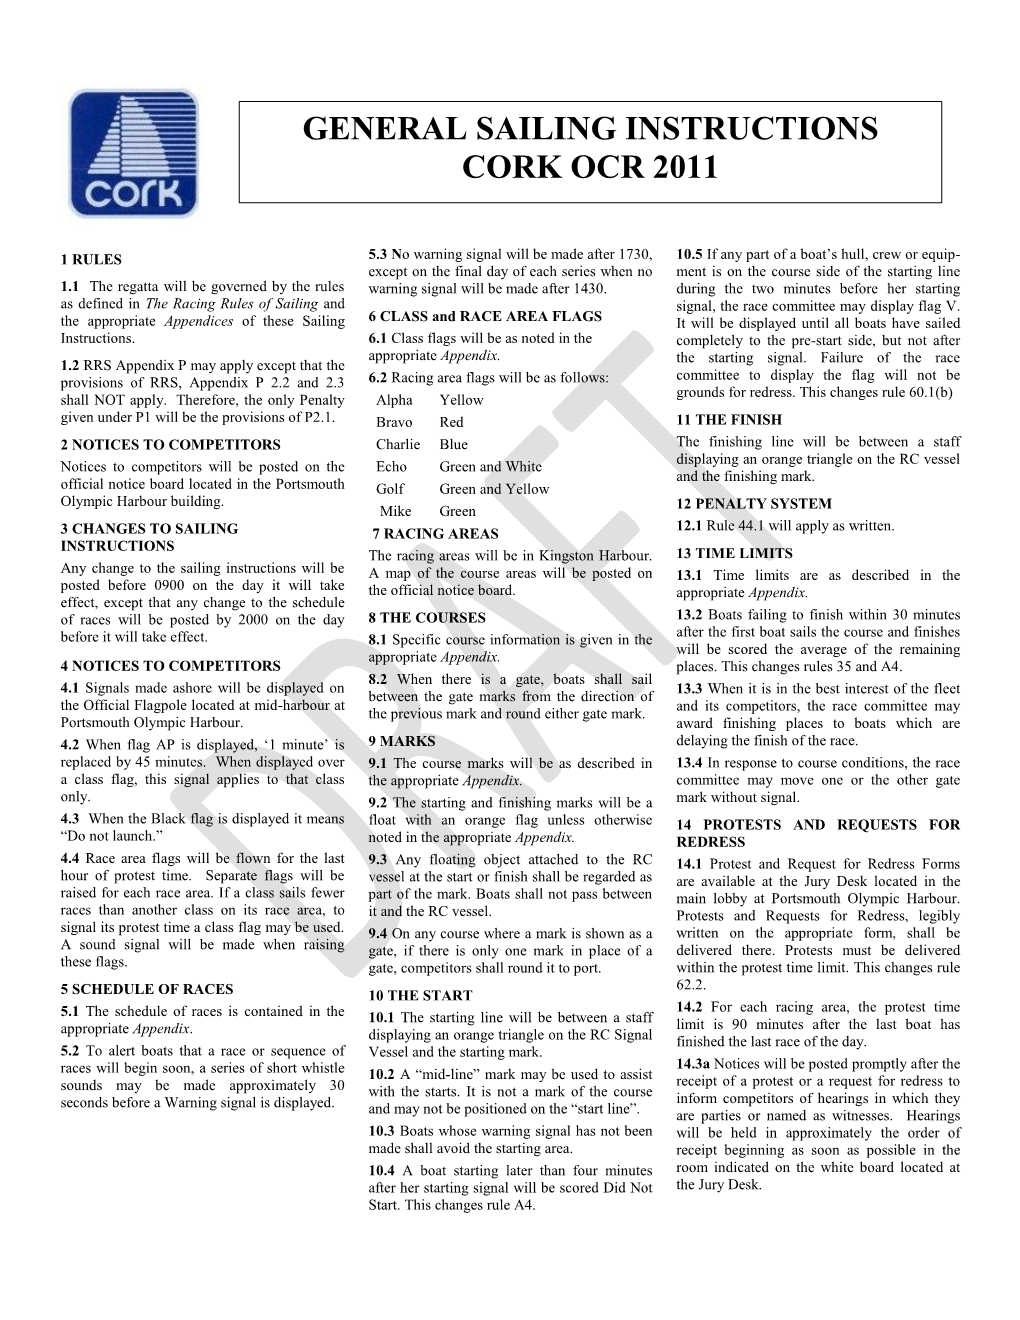 General Sailing Instructions Cork Ocr 2011